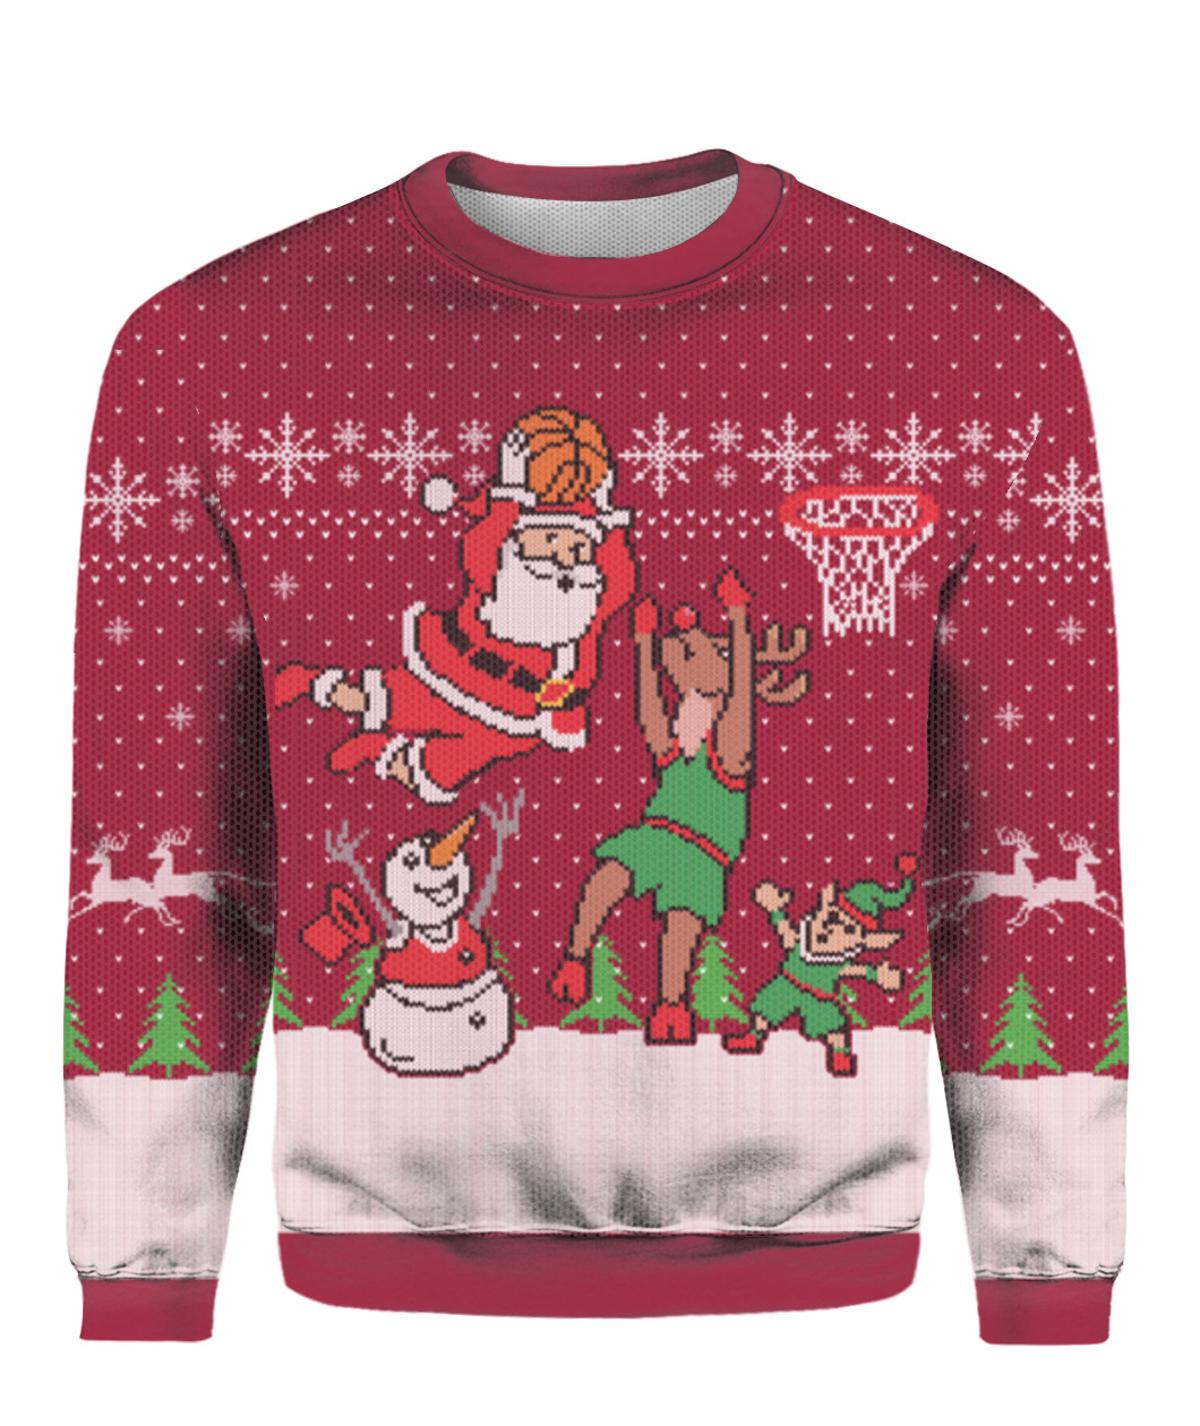 Santa Brings Me A Banjo Christmas Sweater